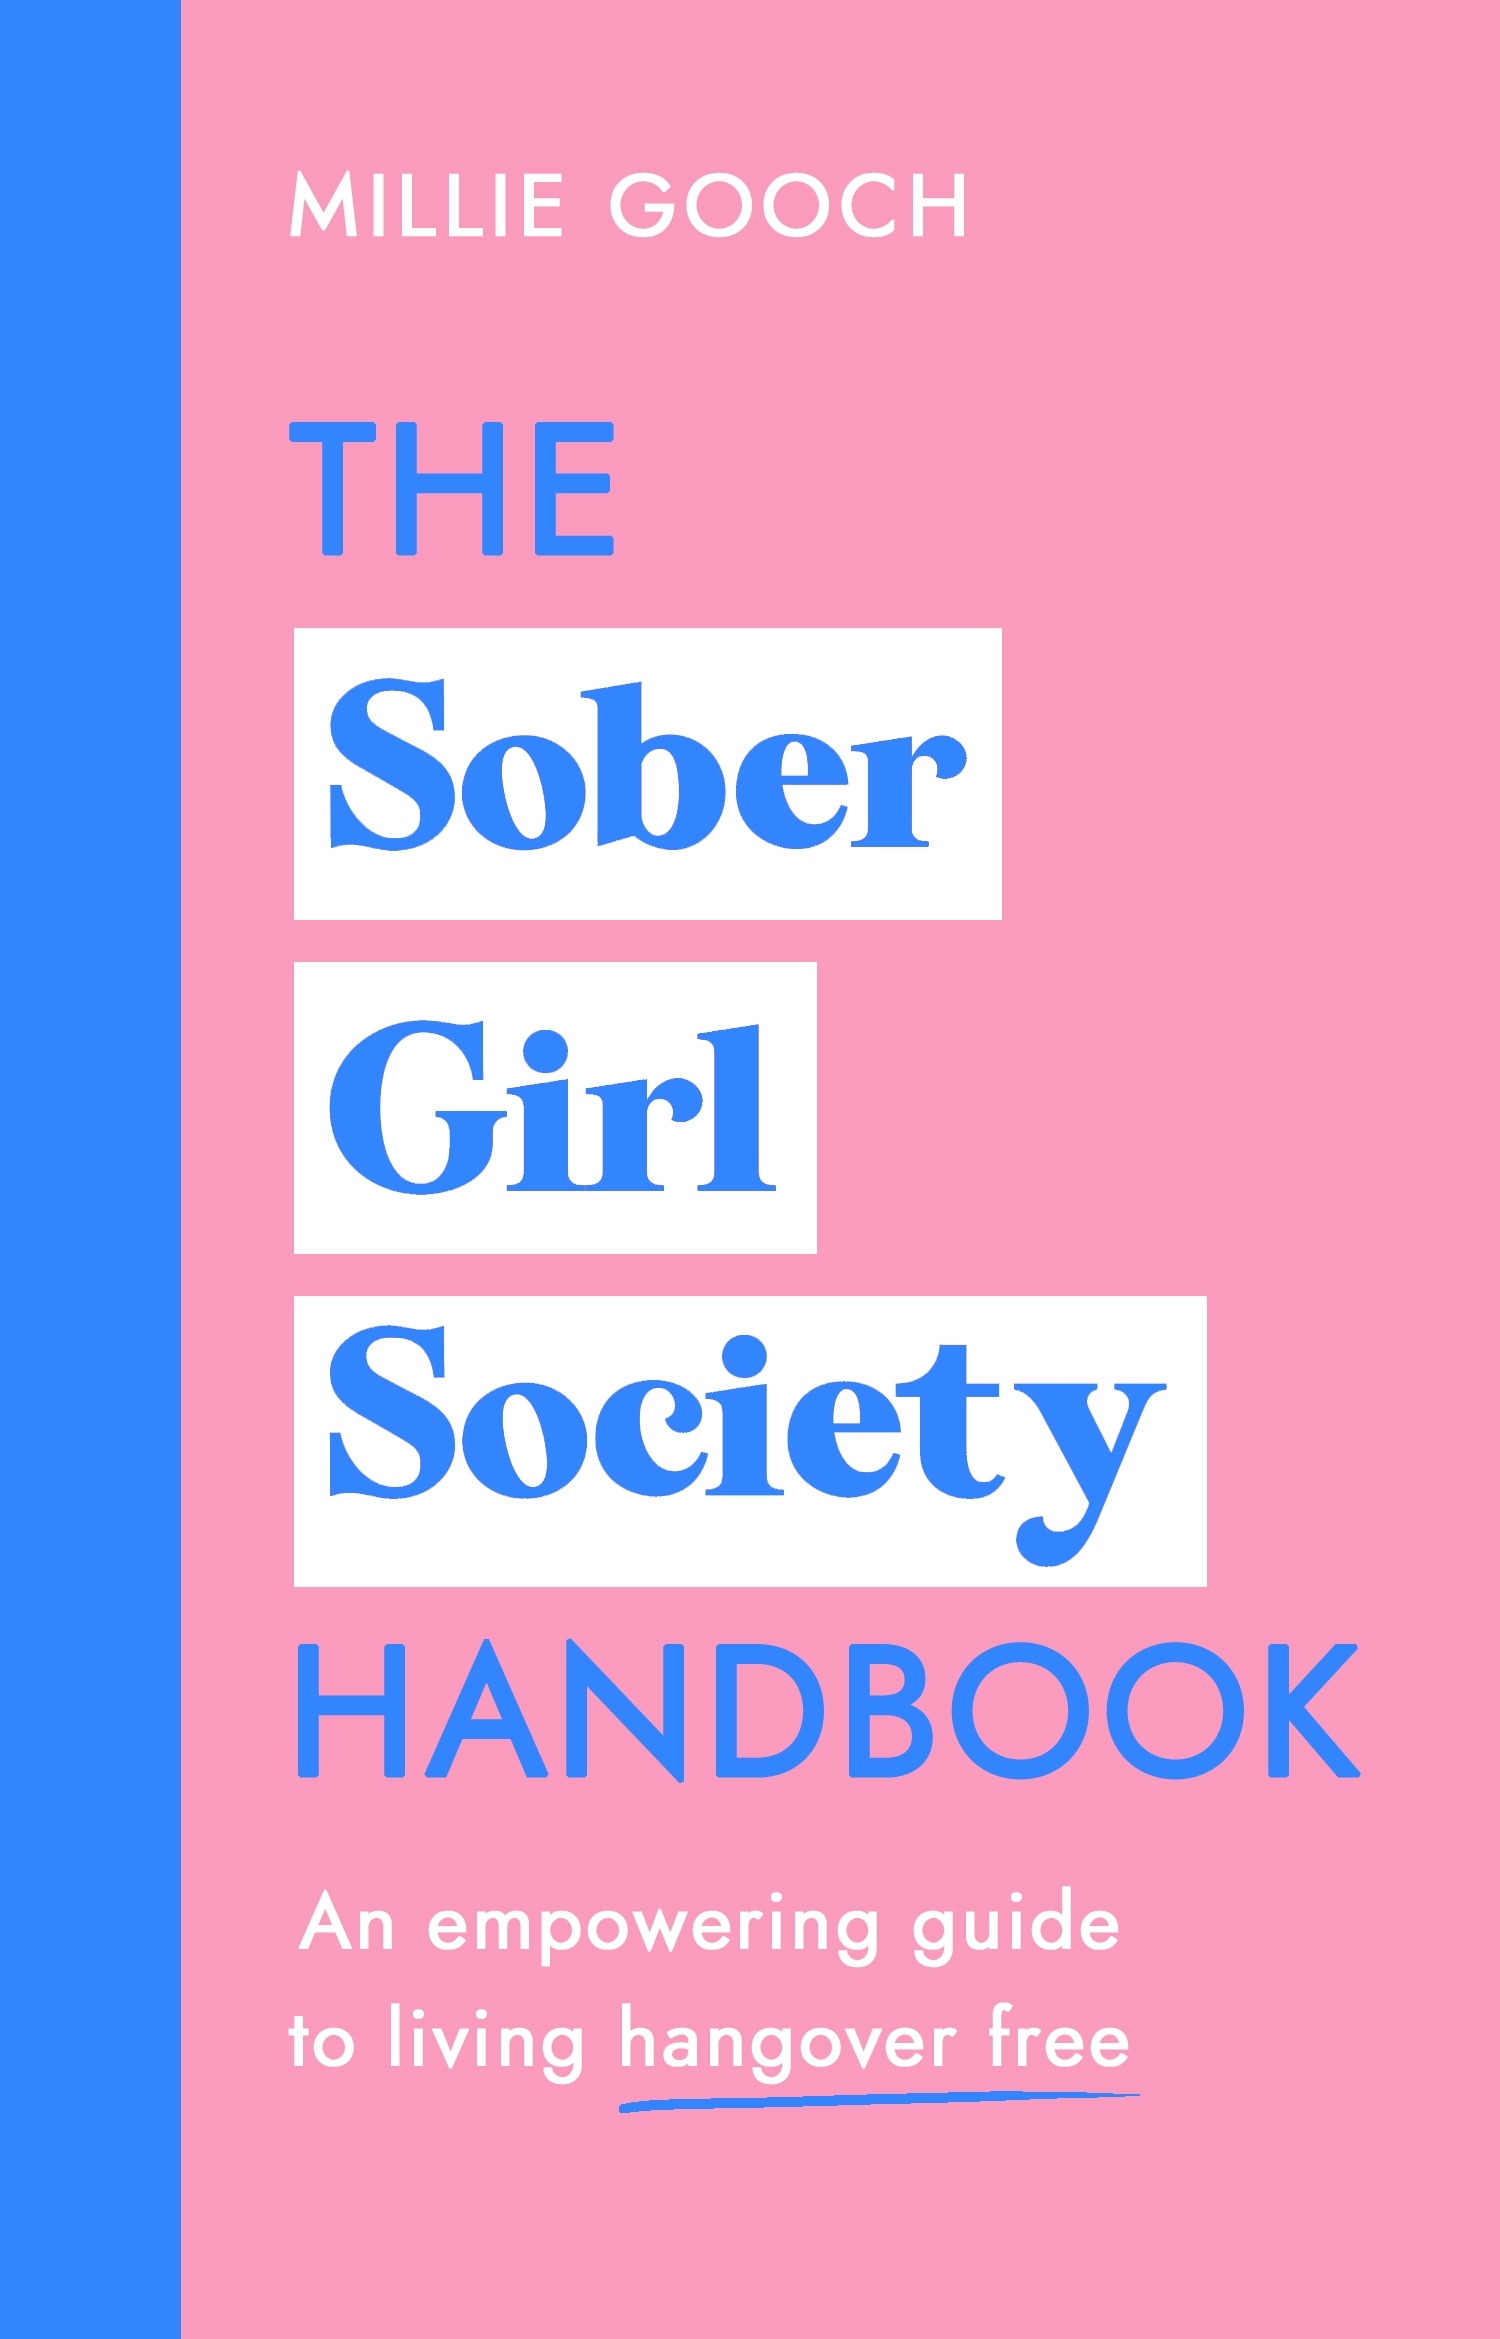 Book “The Sober Girl Society Handbook” by Millie Gooch — January 14, 2021